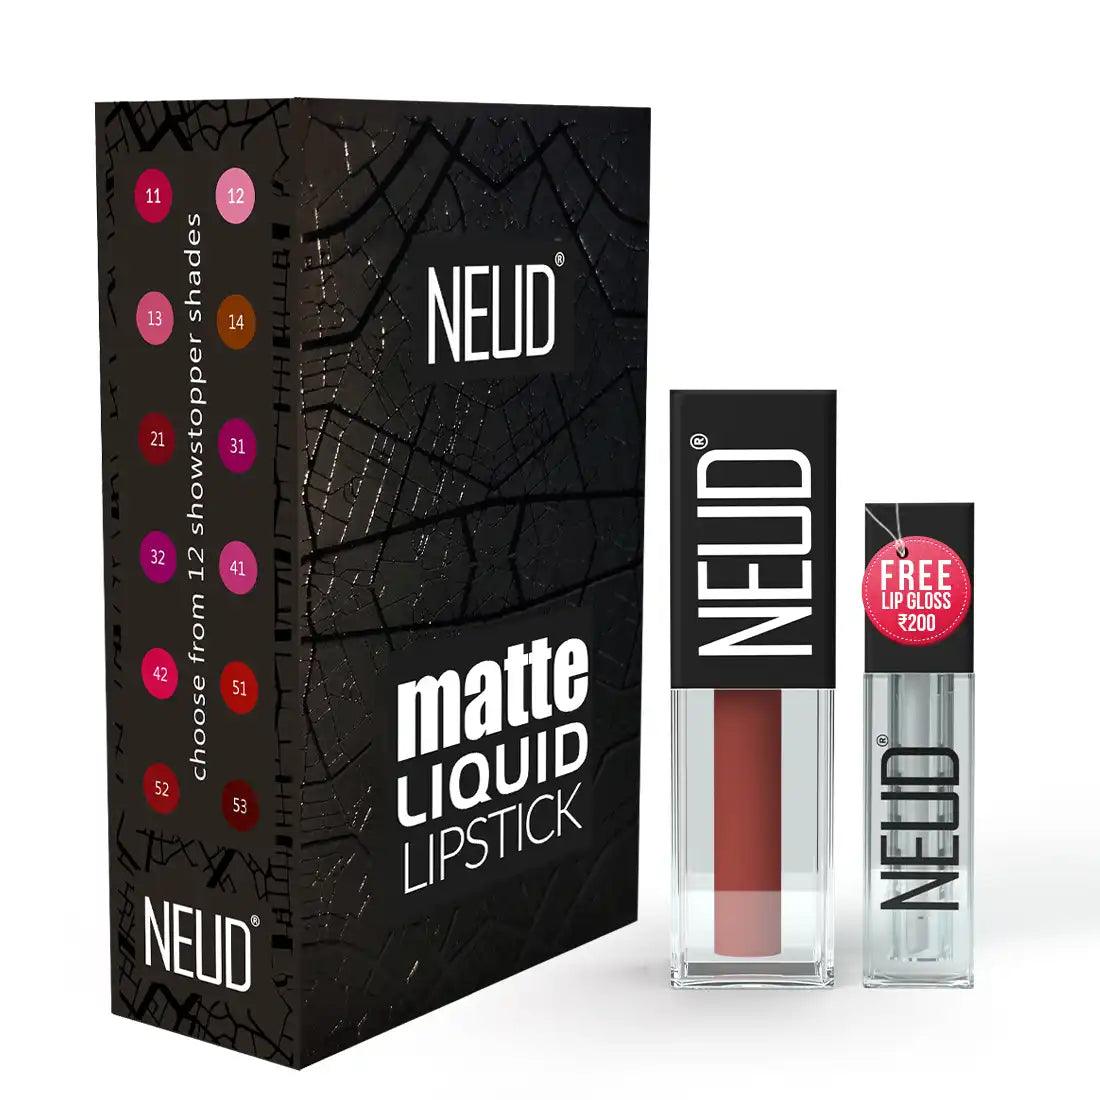 Get Free Lip Gloss Worth Rs.200 Inside Every Pack of NEUD Matte Liquid Lipstick Jolly Coral - everteen-neud.com